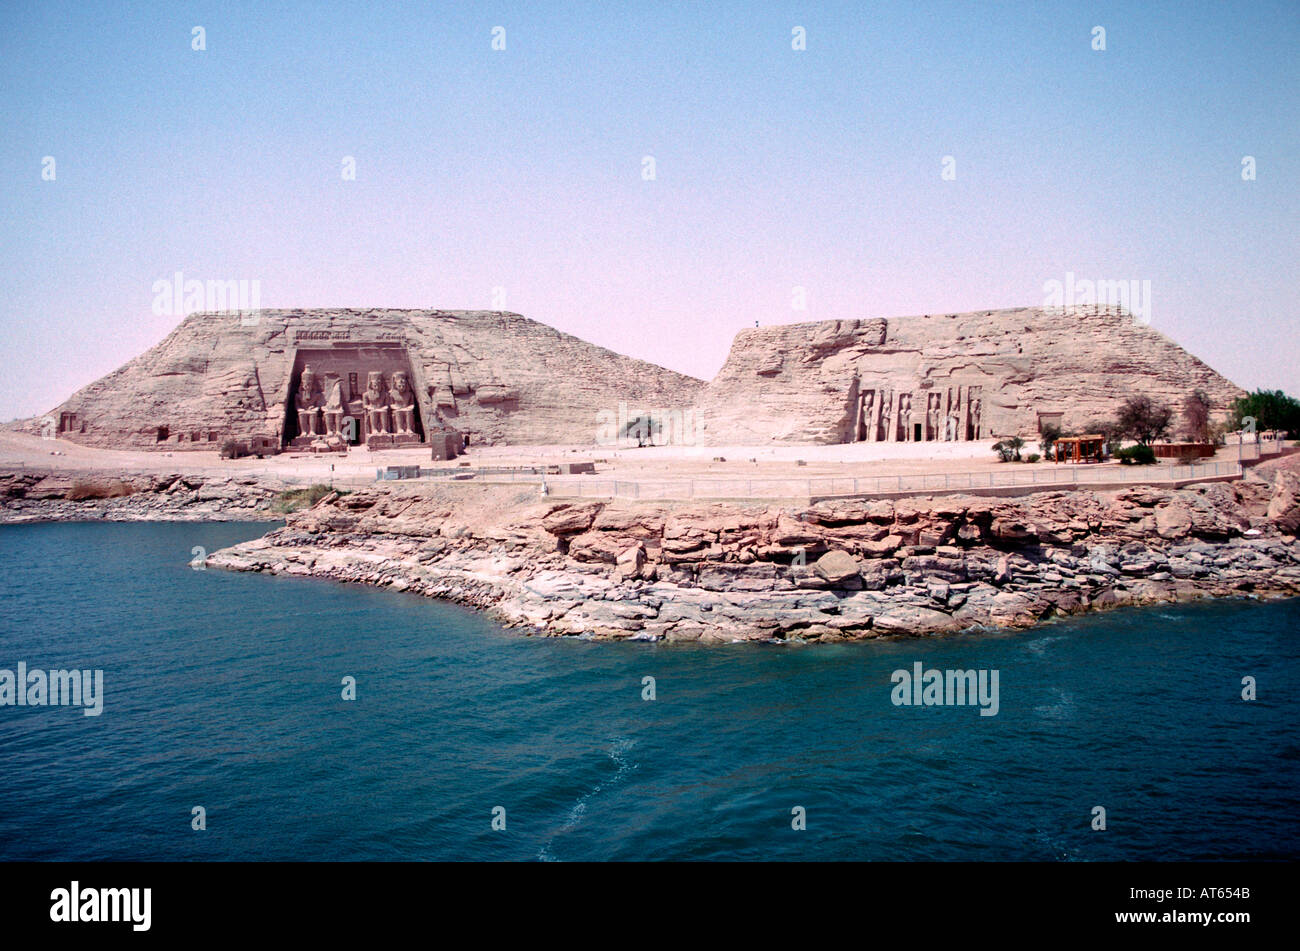 Abu Simbel, Lake Nasser, Egypt. Upper Egypt / Nubia, Egypt. Abu Simbel, Lake Nasser, Egypt. Upper Egypt / Nubia, Egypt. Abu Simbel, Lake Nasser, Egypt. Stock Photo